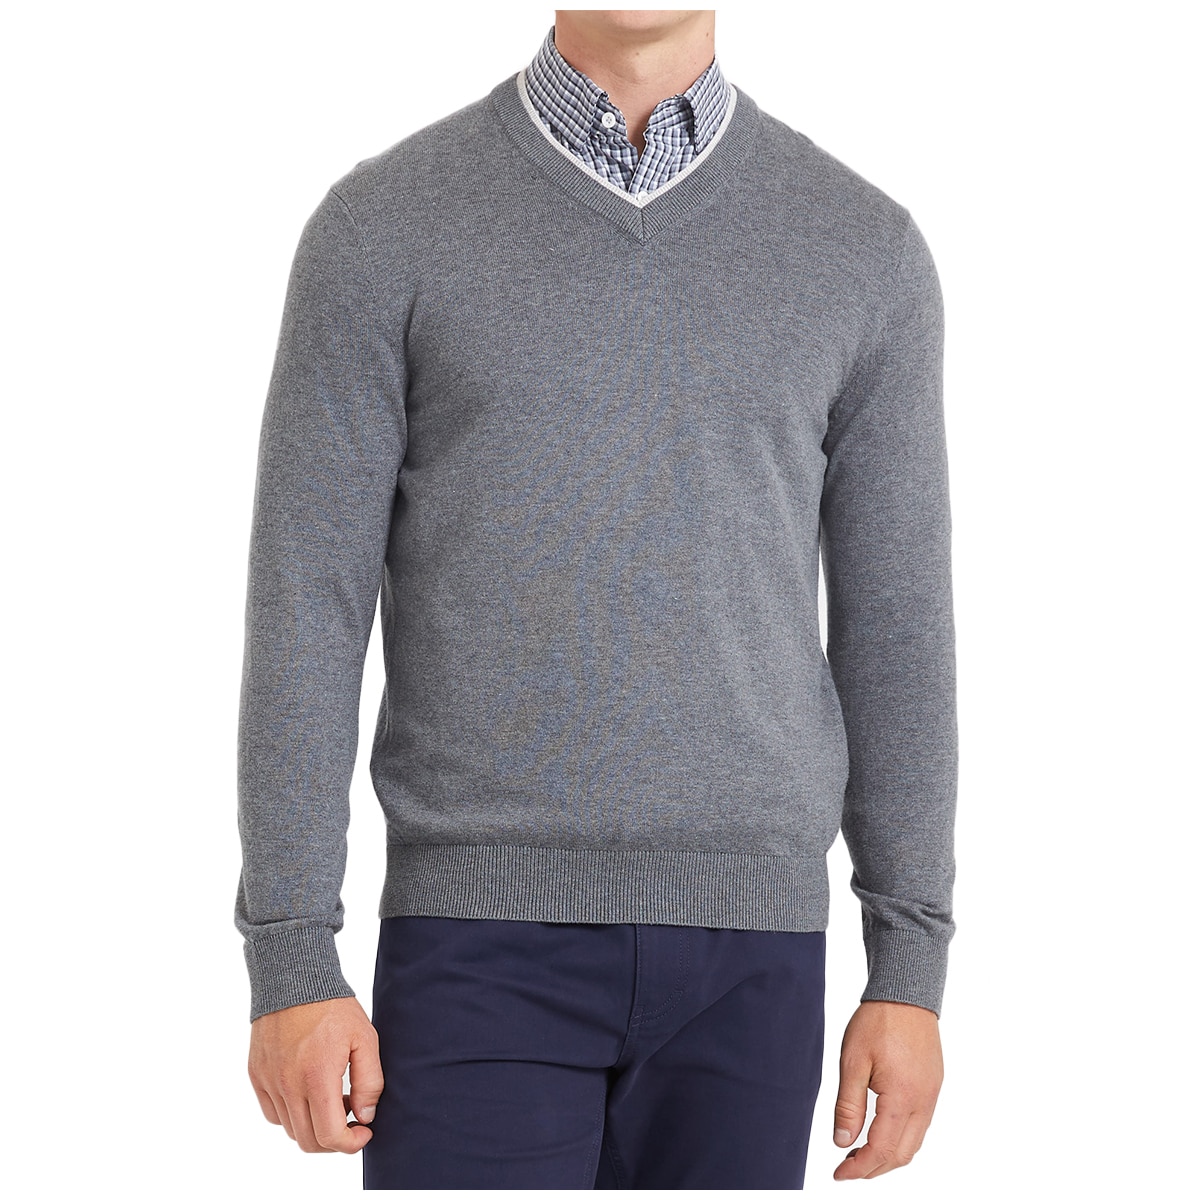 Sportscraft Men's V-Neck Knit Sweater Grey | Costco Austr...